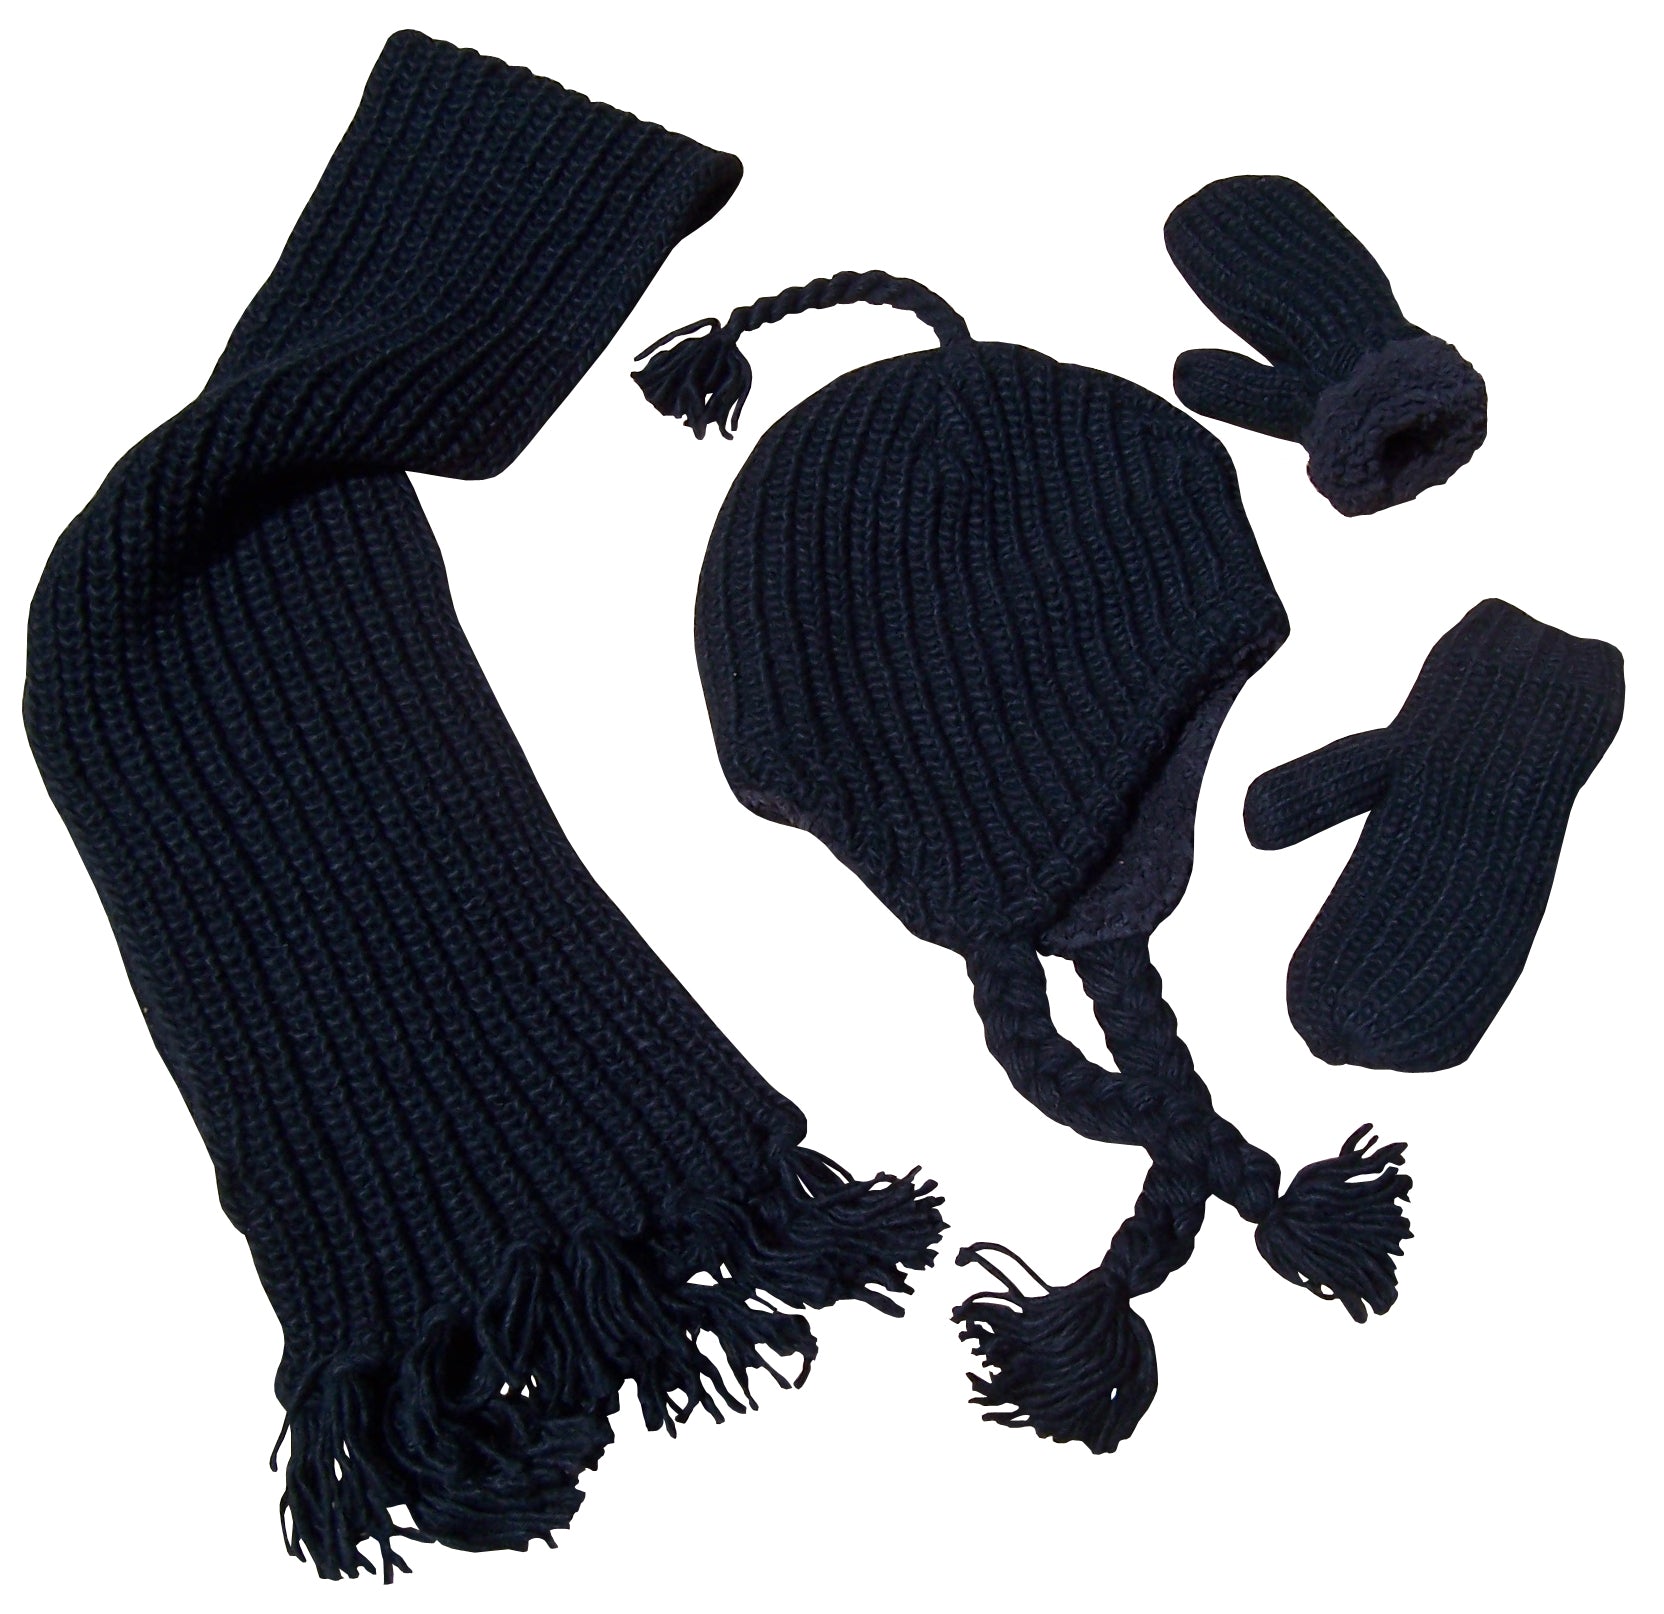 NICE CAPS Boys Children Bulky Knit Hat Mittens Scarf Winter Snow ...